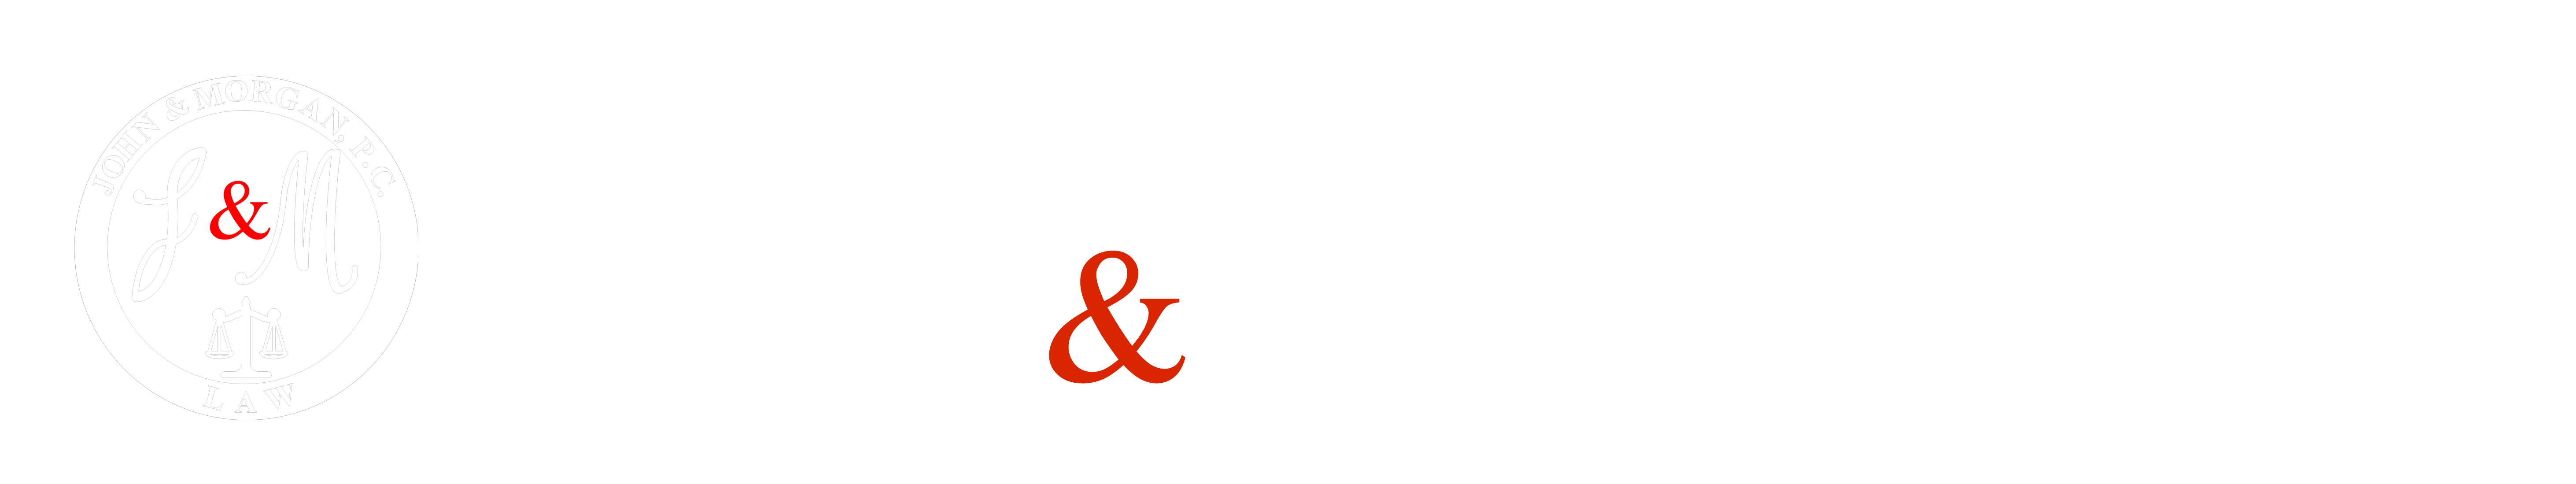 The Law Firm of John & Morgan, P.C.